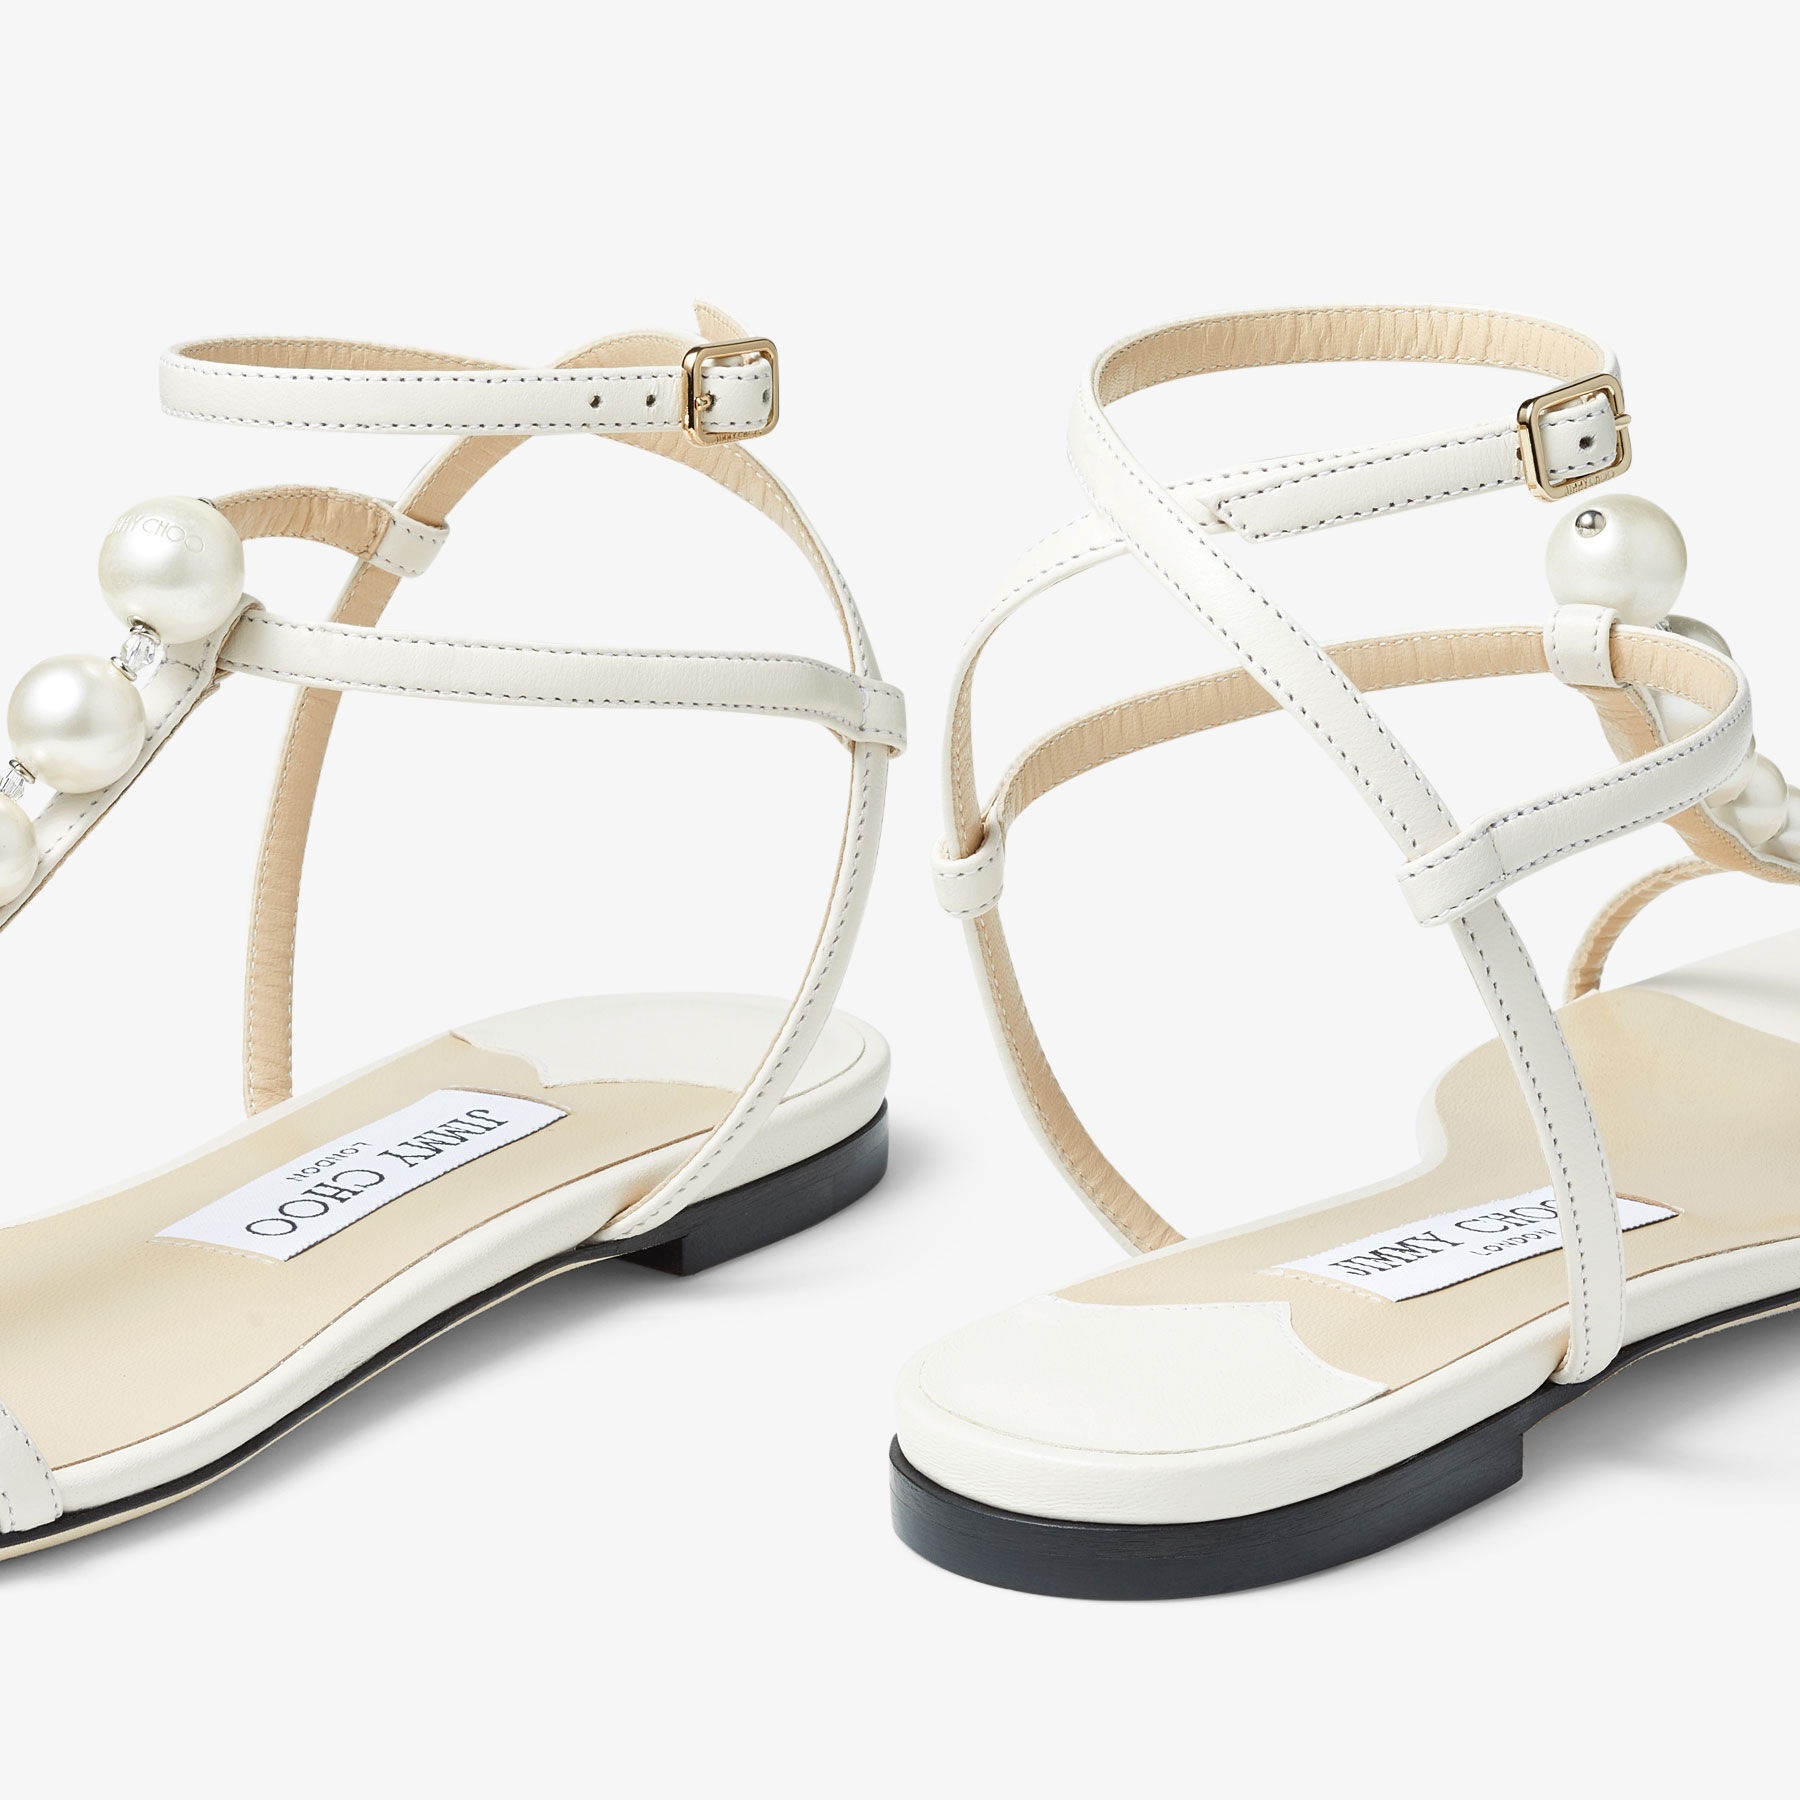 Amari Flat
Latte Nappa Leather Flat Sandals with Pearls - 4